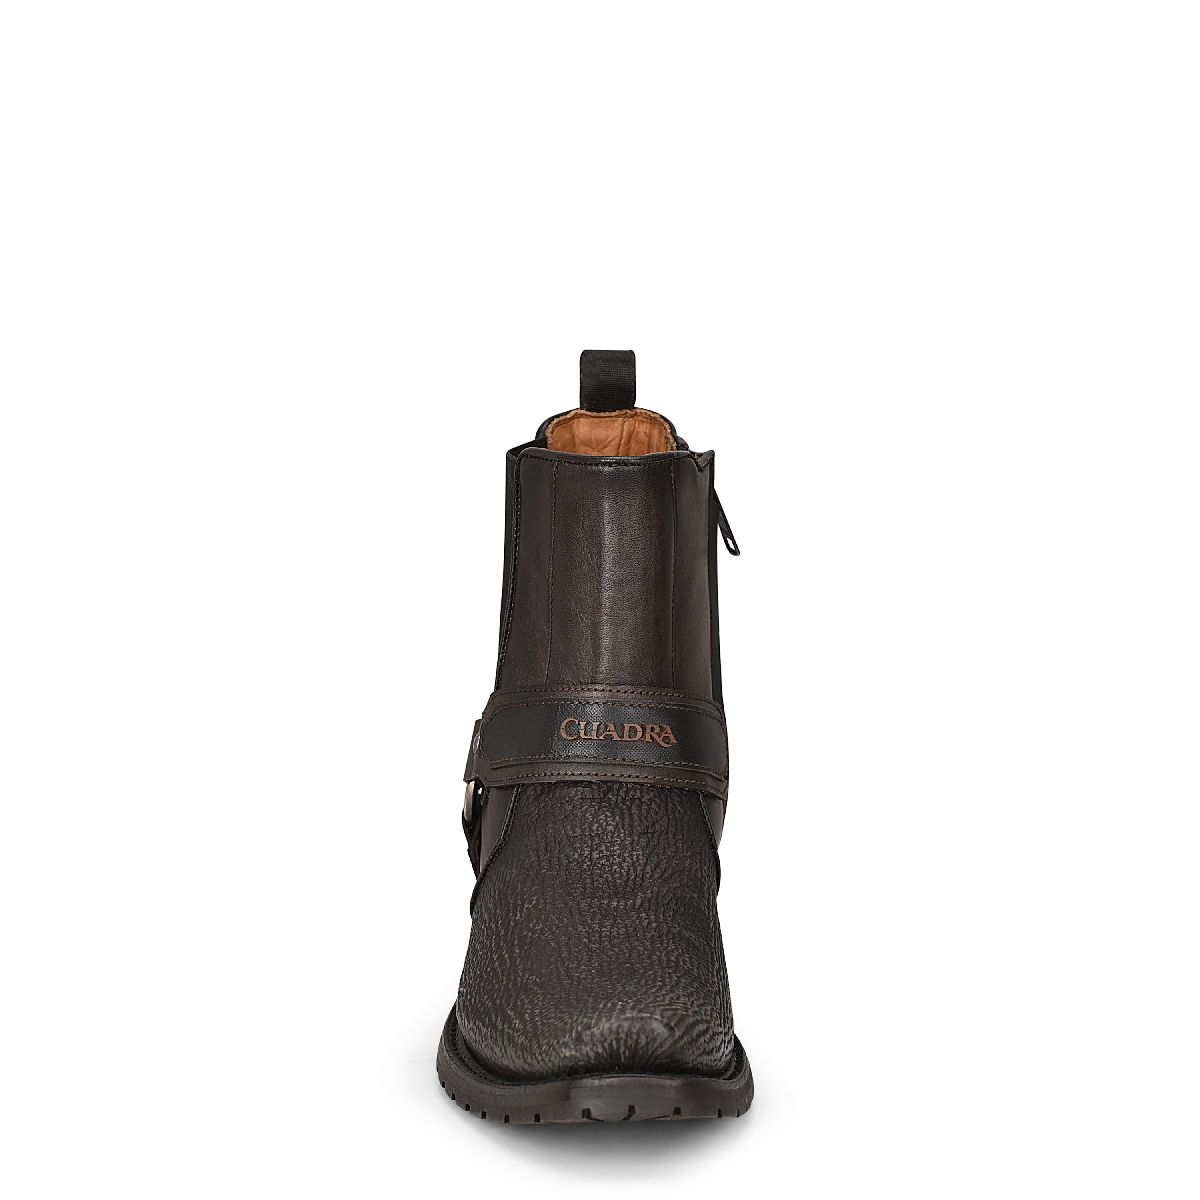 1J2LTI - Cuadra black fashion cowboy shark ankle boots for men.-CUADRA-Kuet-Cuadra-Boots